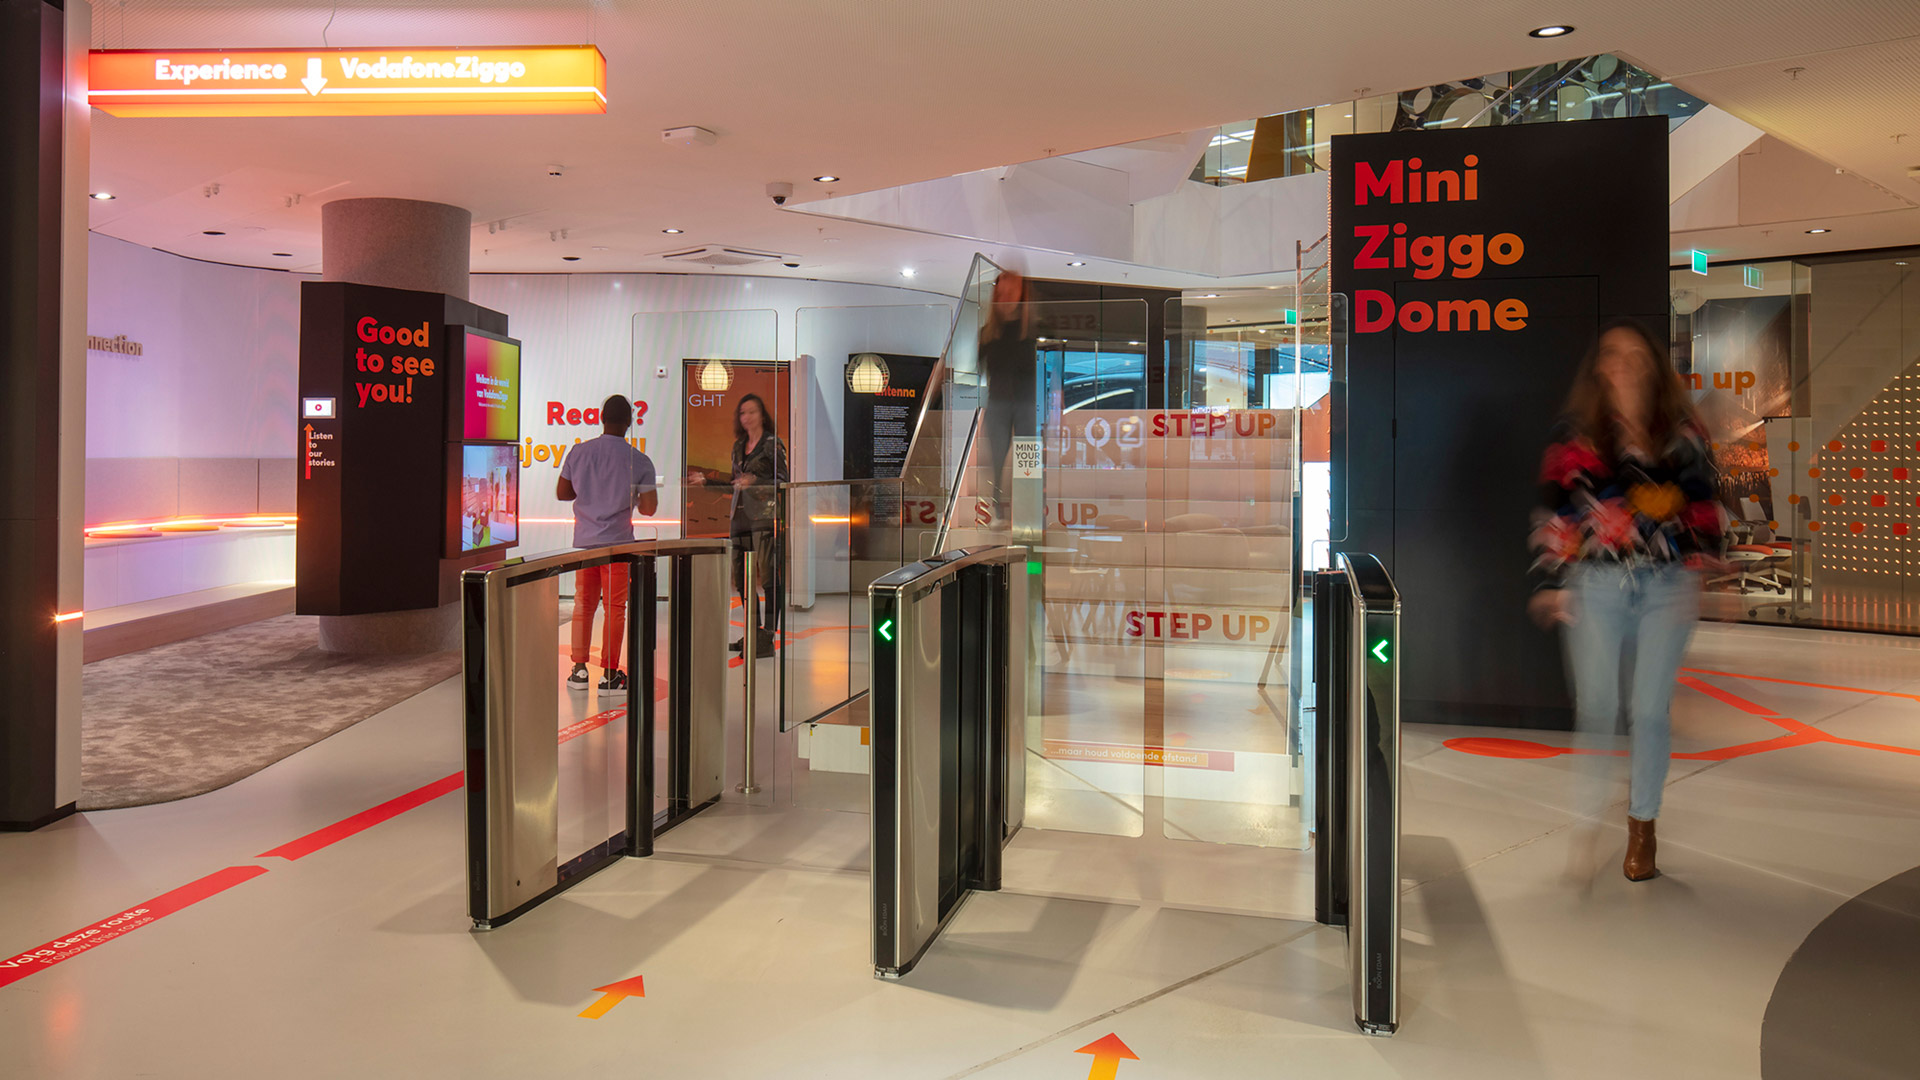 Joy to the max in VodafoneZiggo’s Mini Ziggo Dome